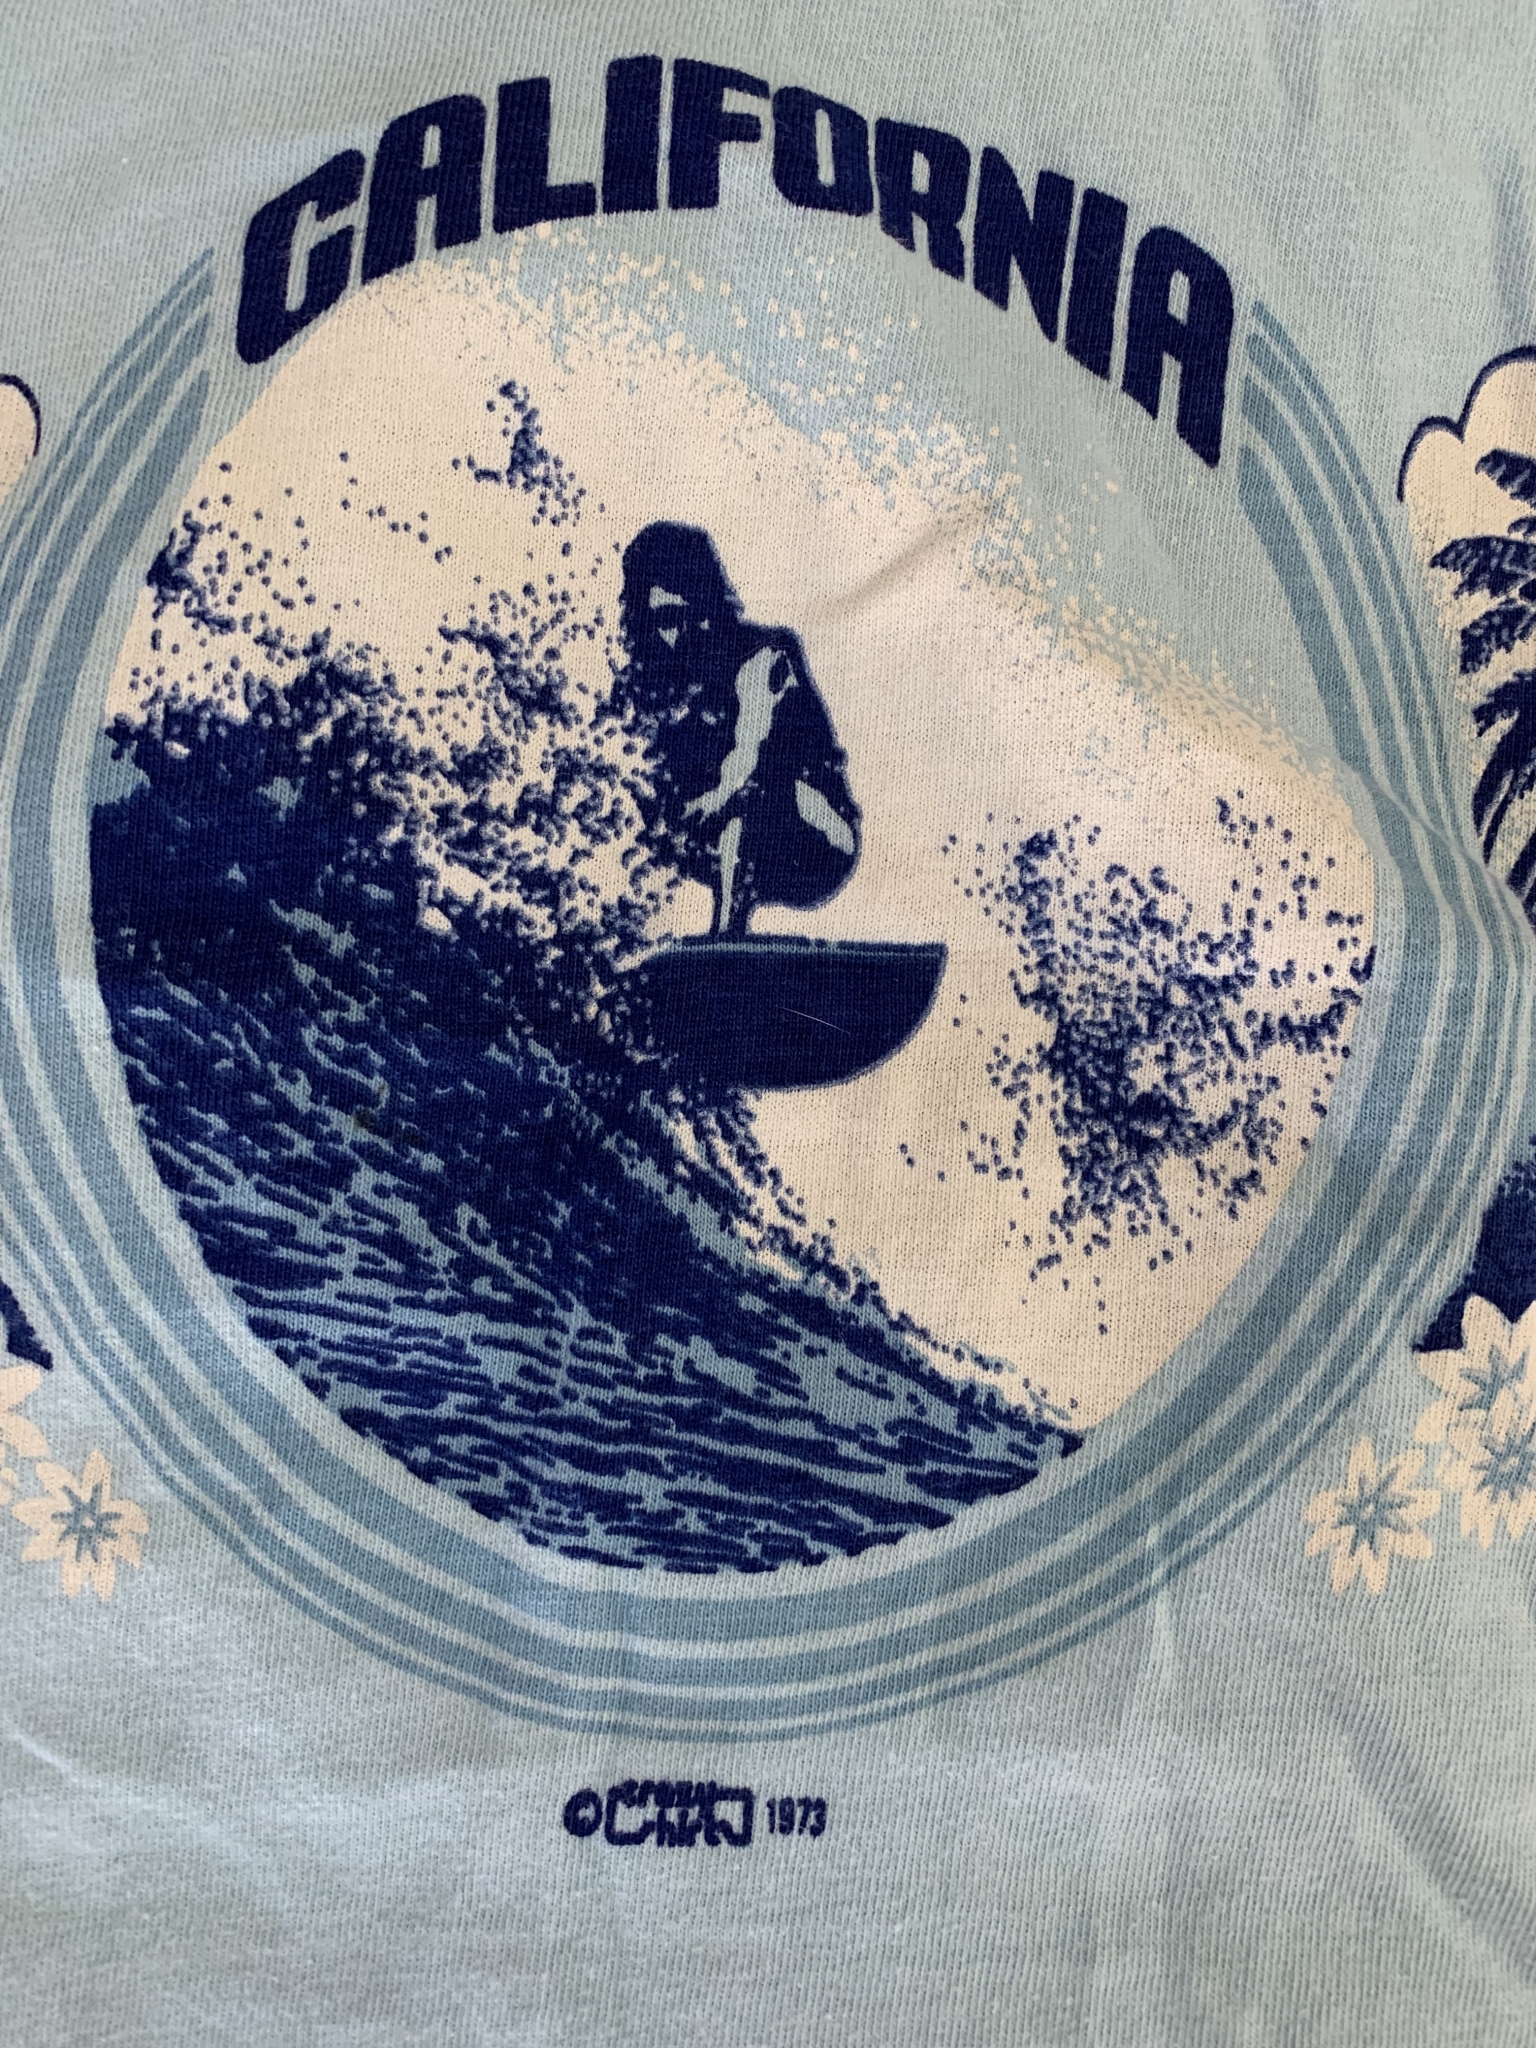 vintage 1973 california surfer surfing t-shirt crazy shirts